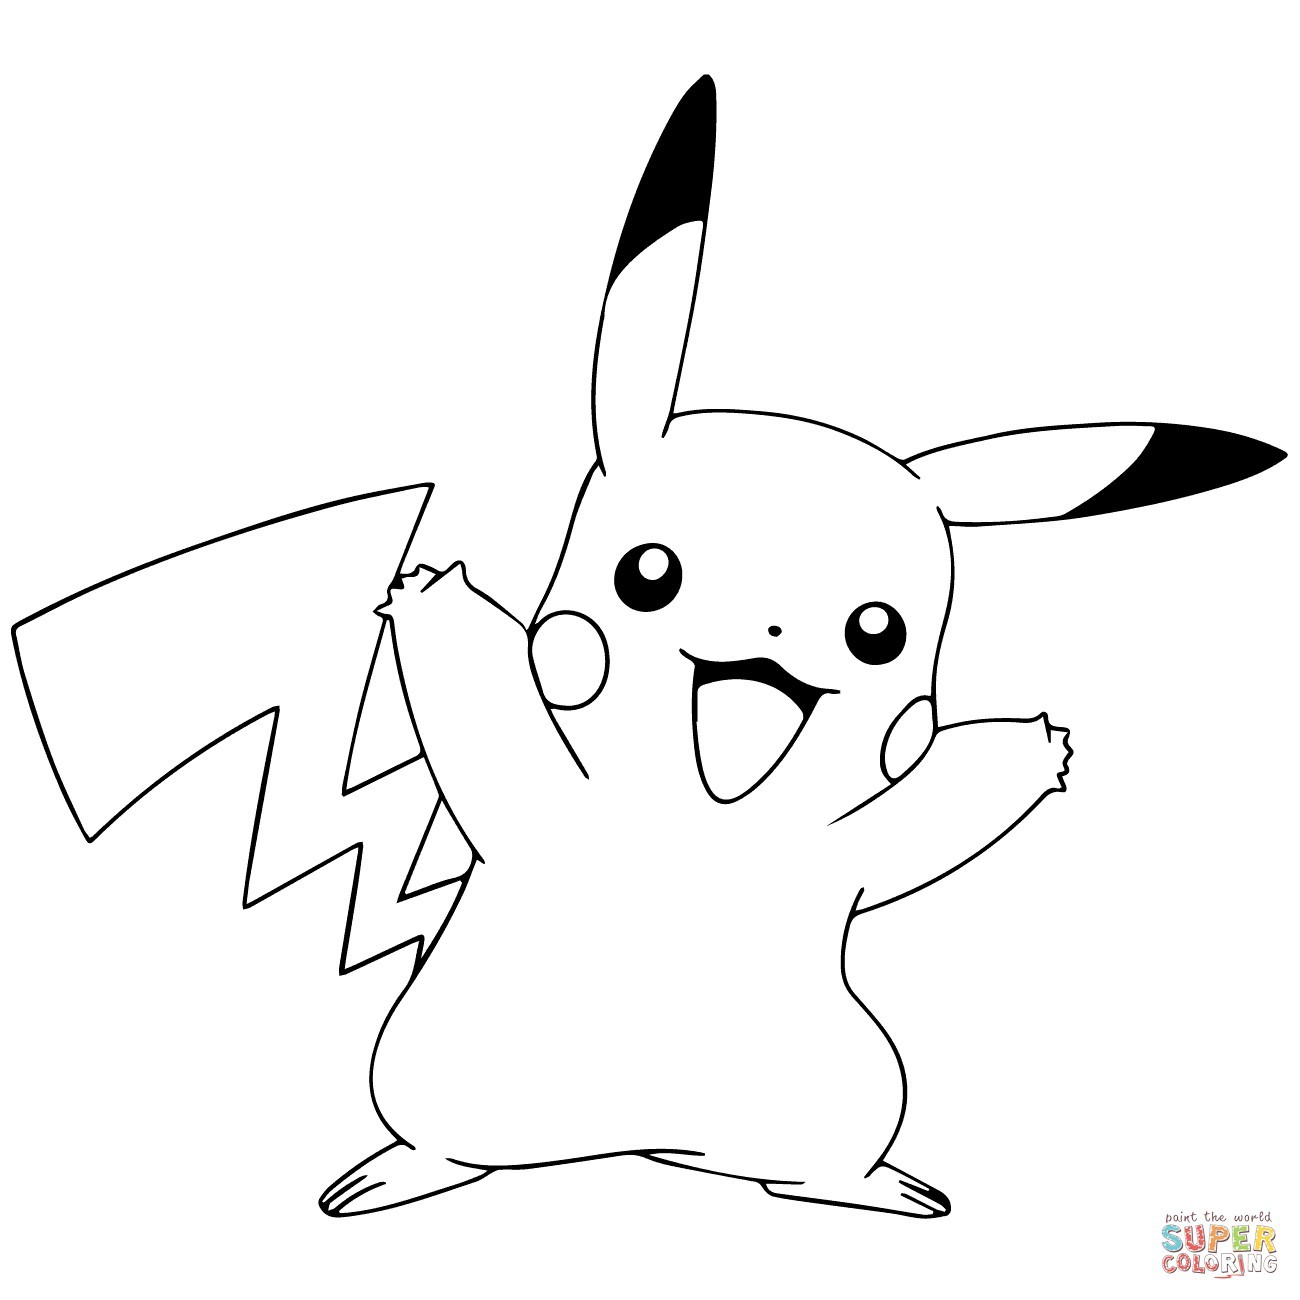 Pikachu Pokemon Go Coloring Pages - BubaKids.com